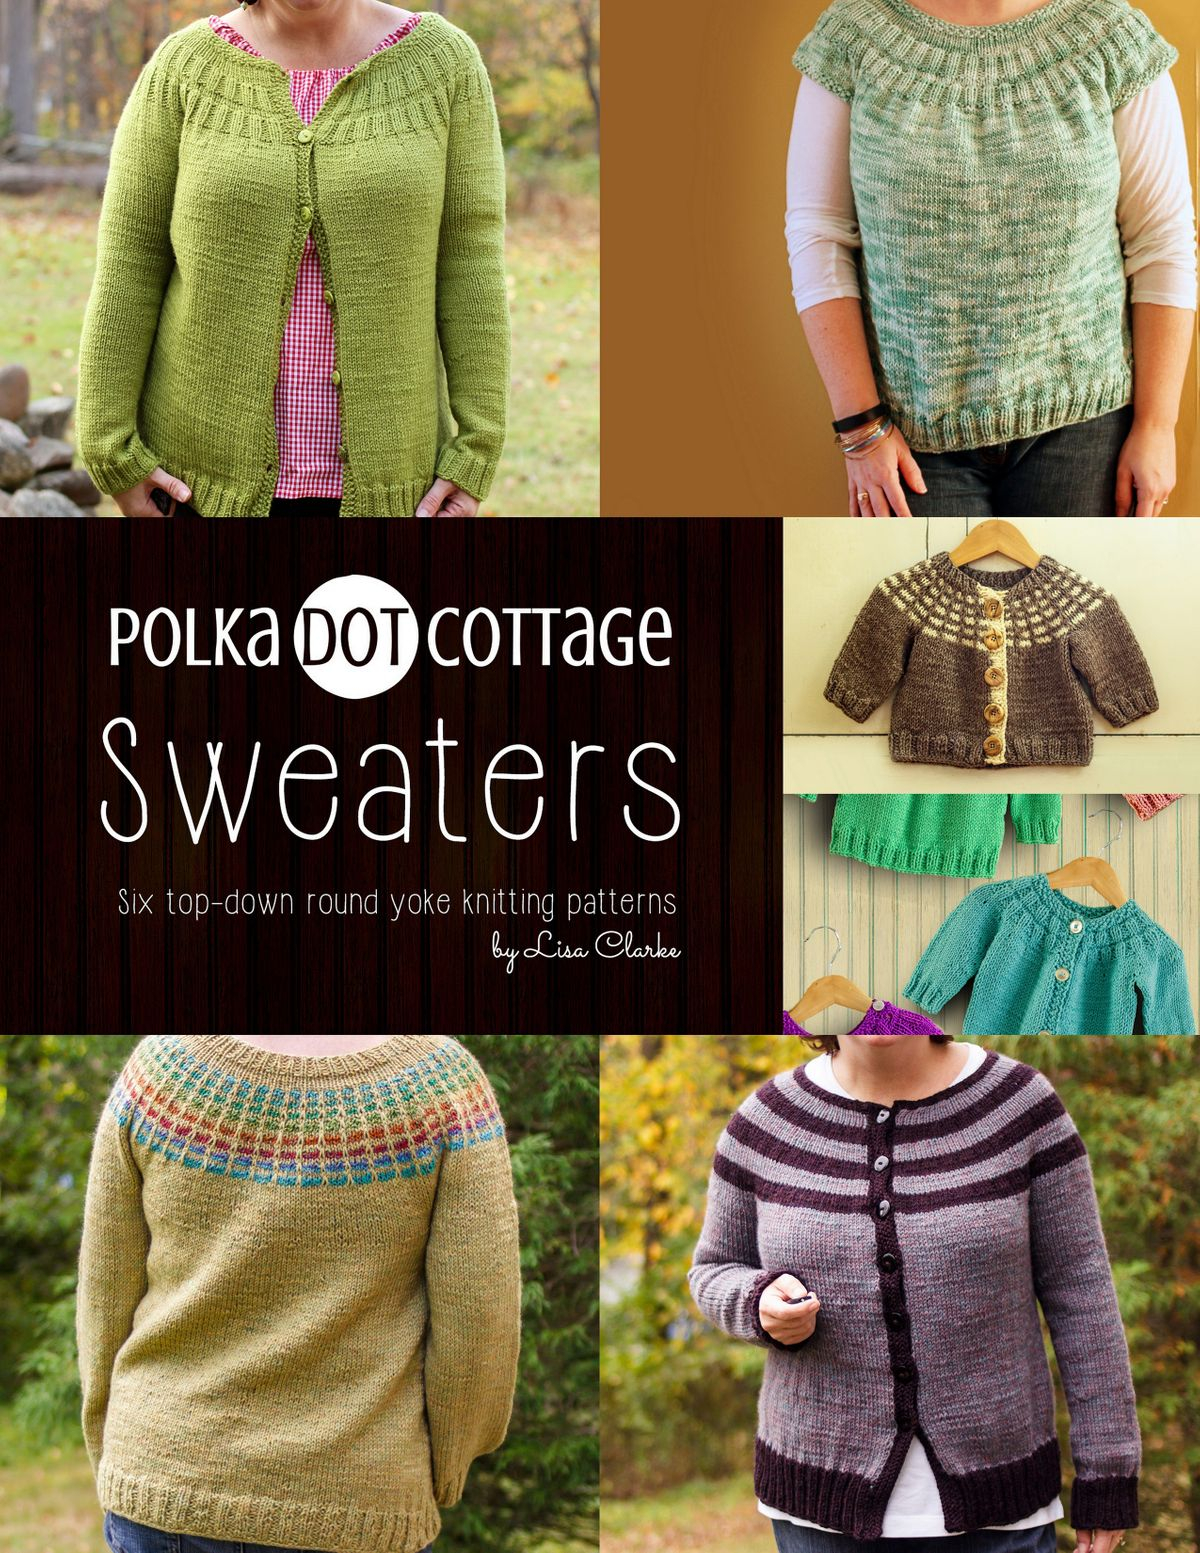 Yoke Knitting Pattern Polka Dot Cottage Sweaters Ebook Lisa Clarke Rakuten Kobo